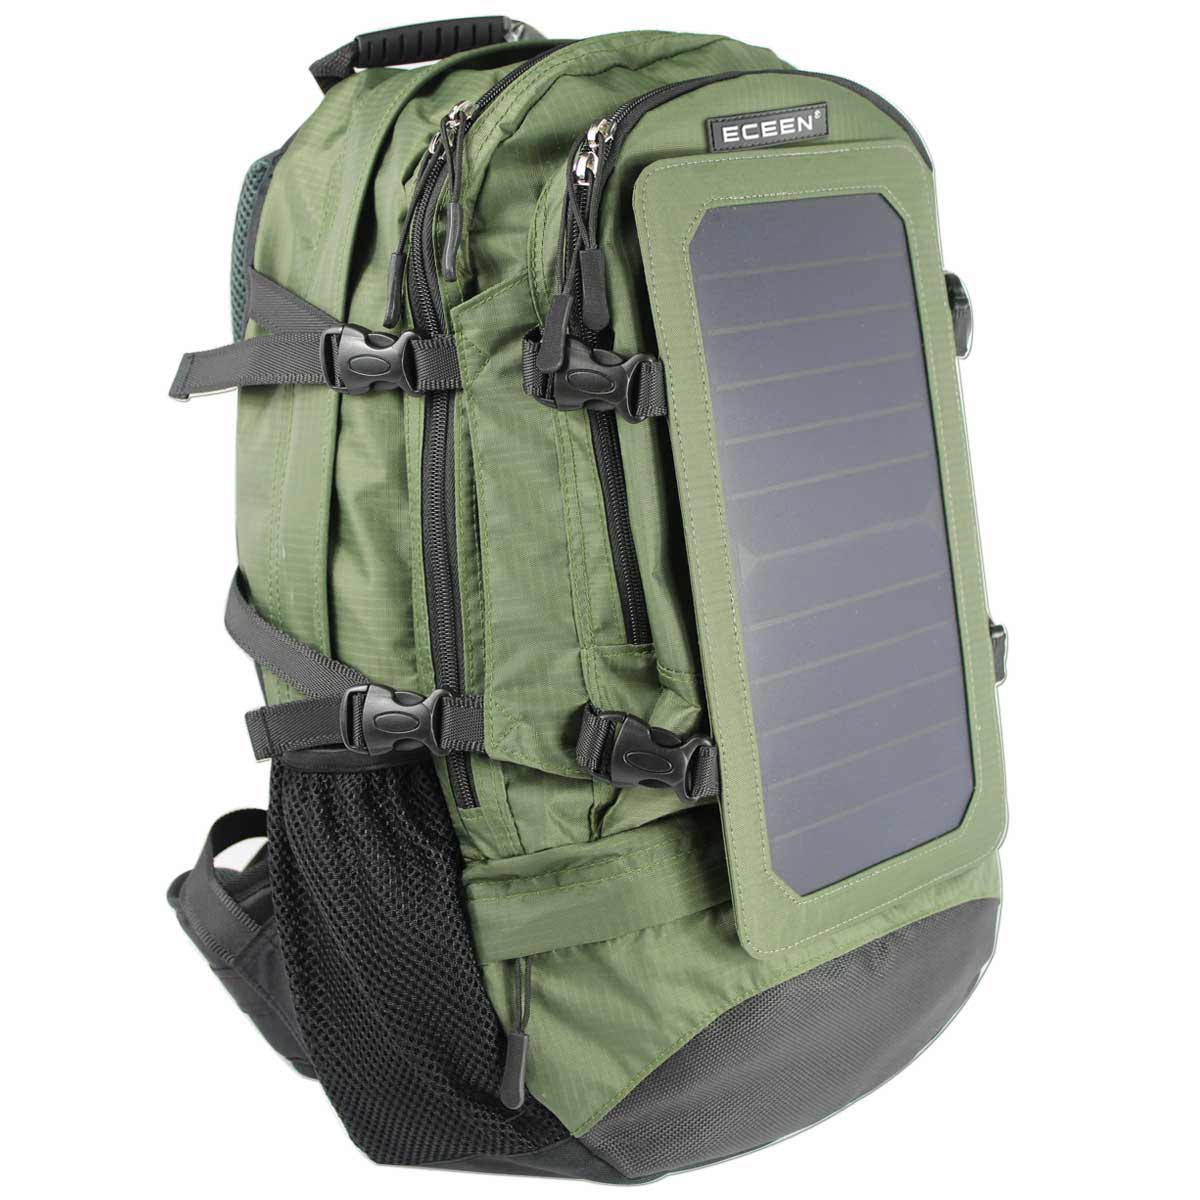 Solar Powered Backpack USB Charging Bag